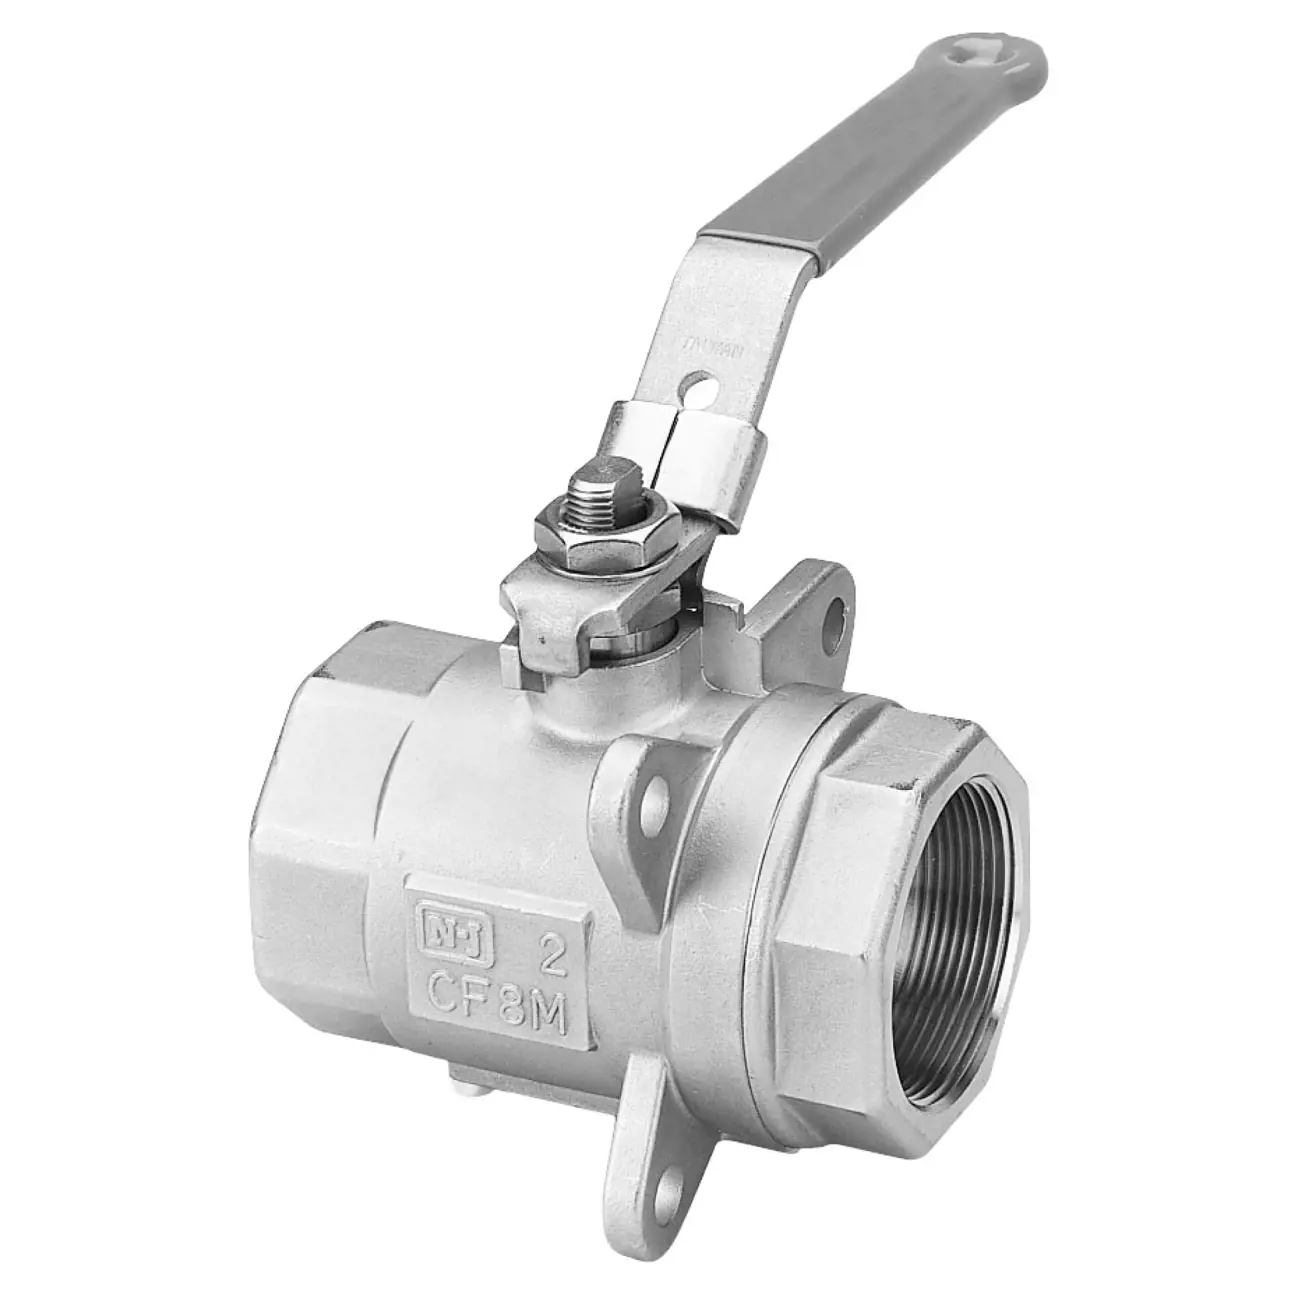 ValmetJamesbury™ standard port ball valve, series 5H